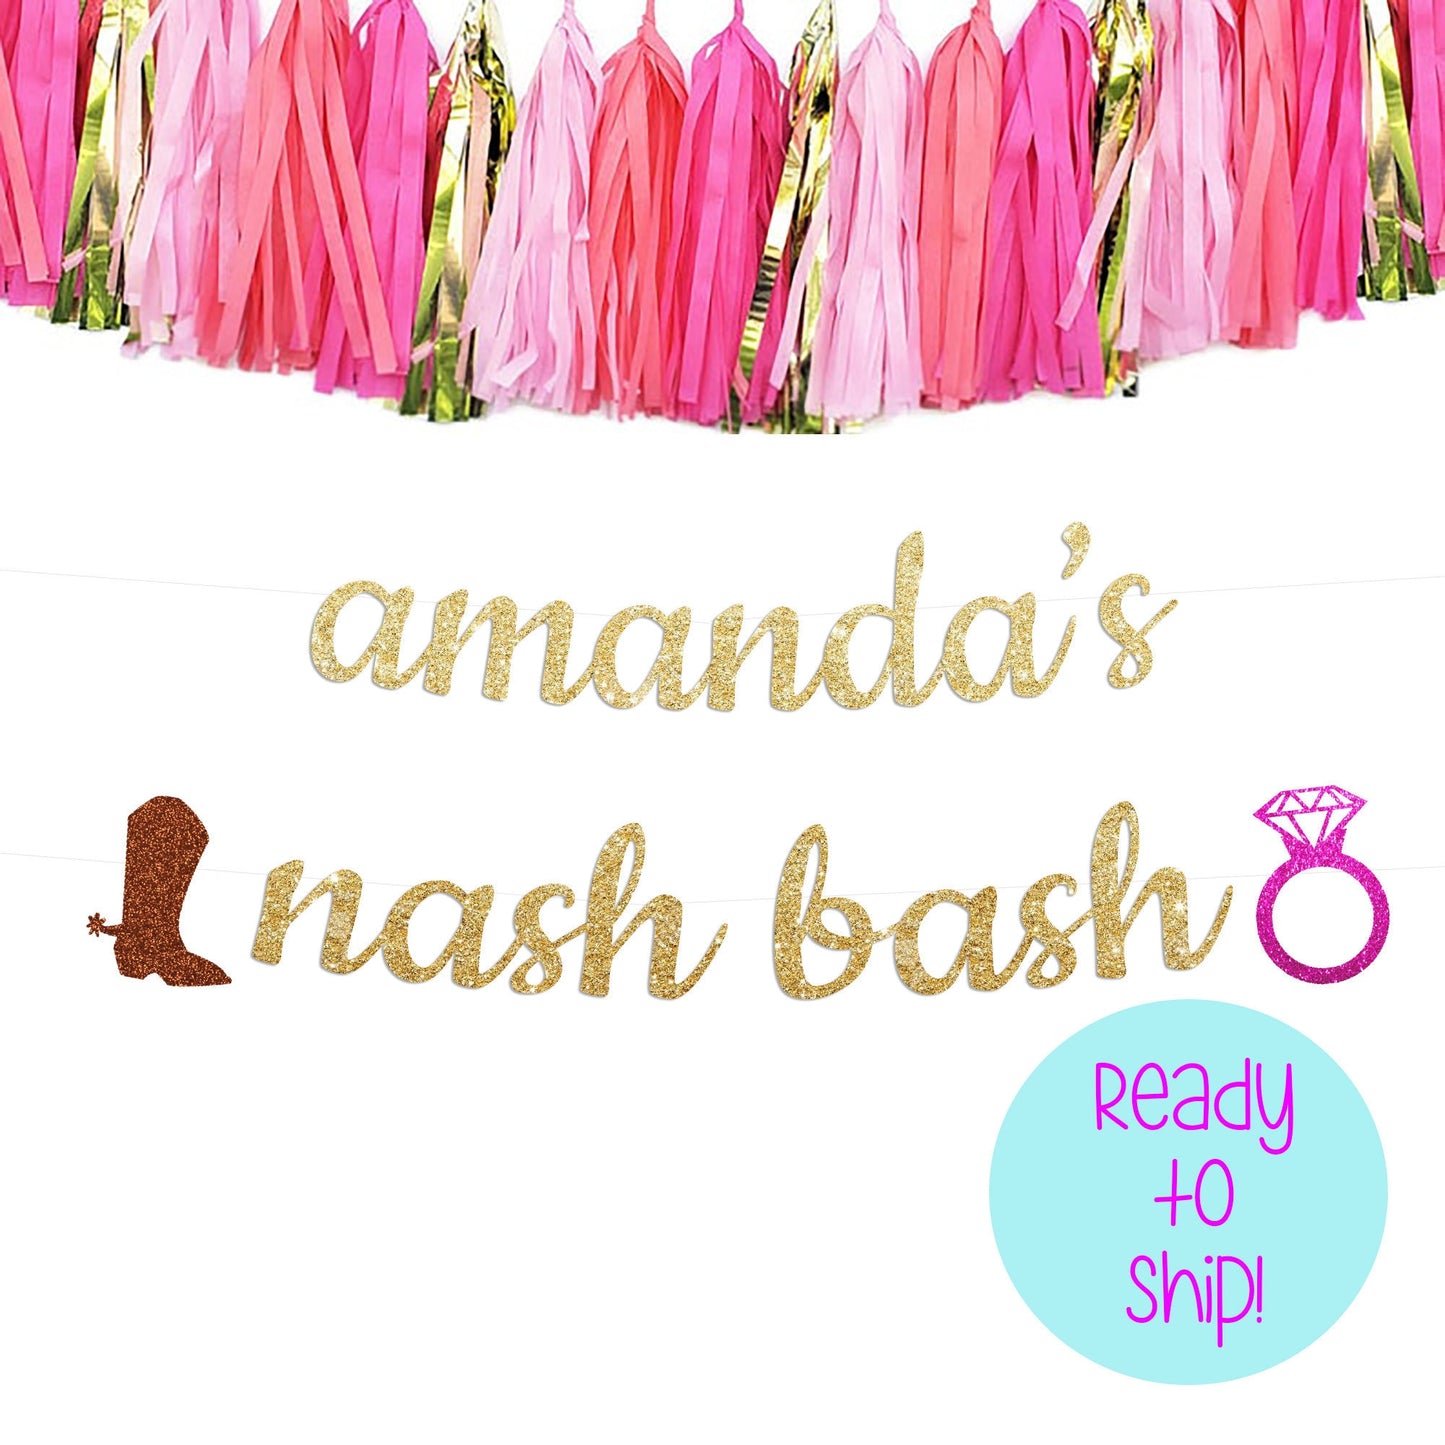 Nash Bash Bachelorette Party Banner, Nashville Bachelorette, Personalized Bachelorette Party Banner, Boots and Bling Banner, Boots and Ring